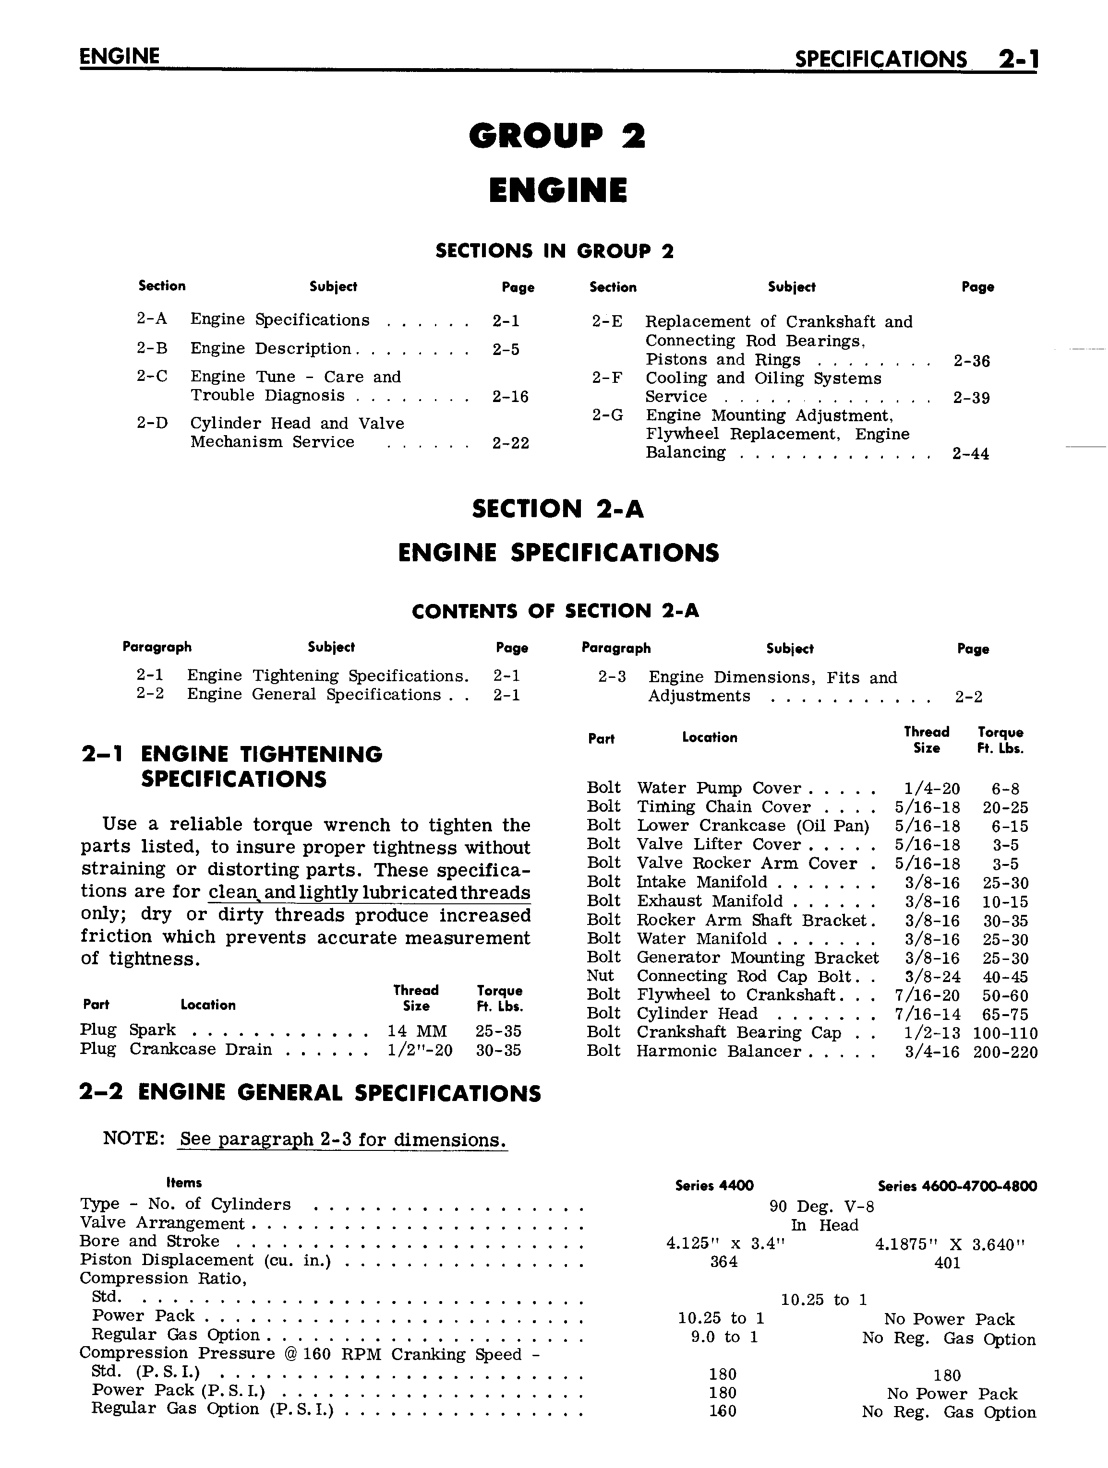 n_03 1961 Buick Shop Manual - Engine-001-001.jpg